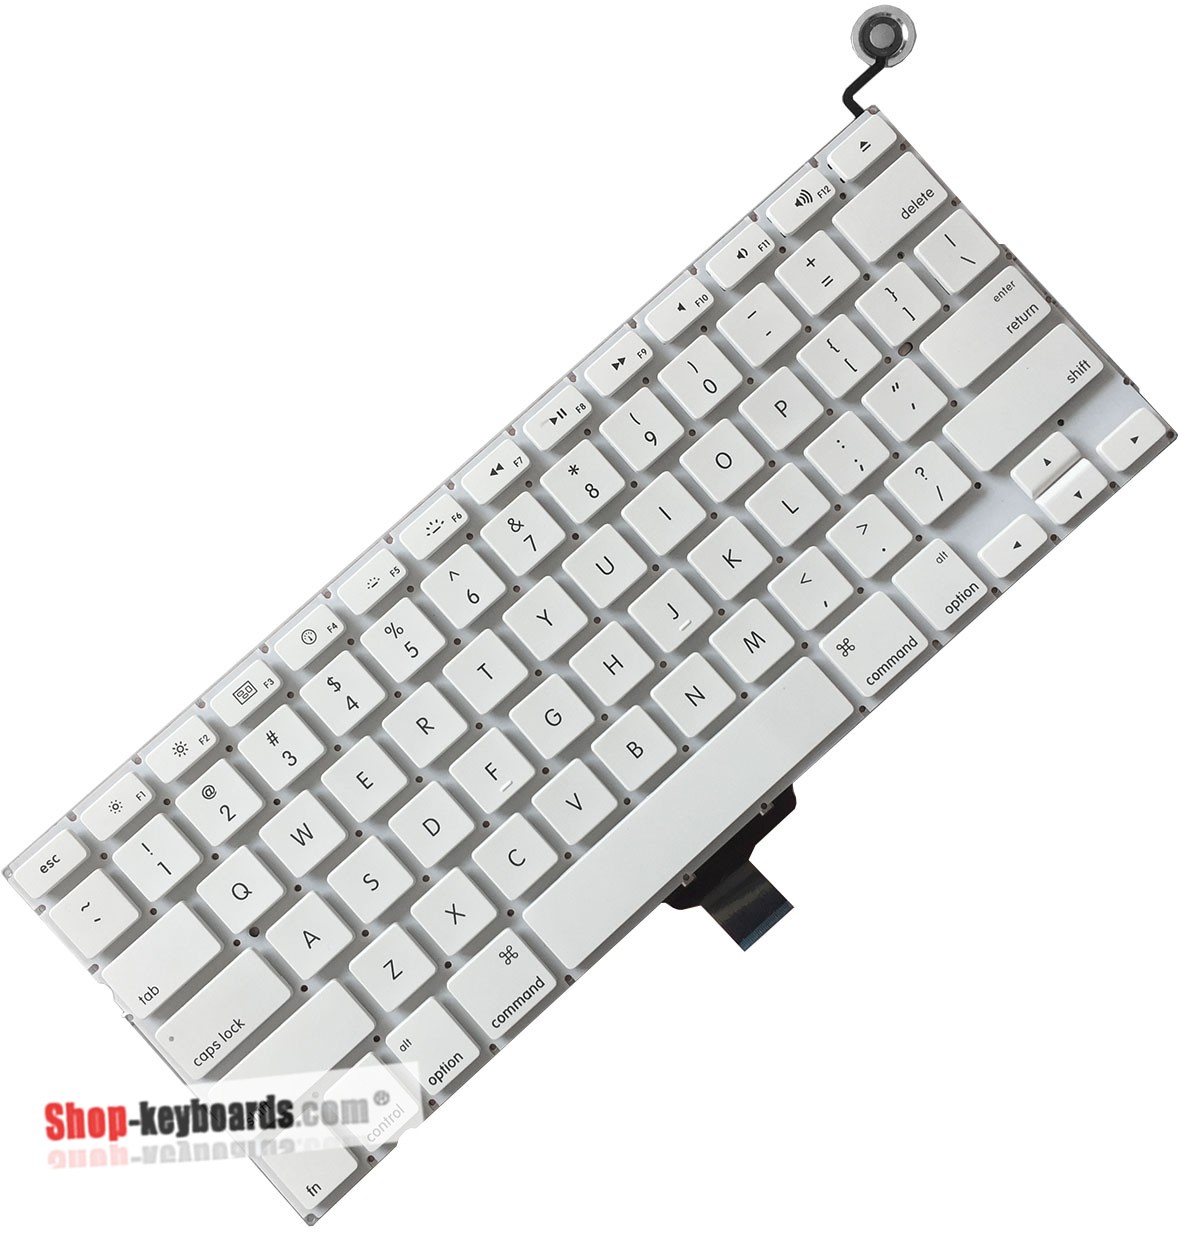 Apple MACBOOK UNIBODY 13 INCH MC207LL/A Keyboard replacement